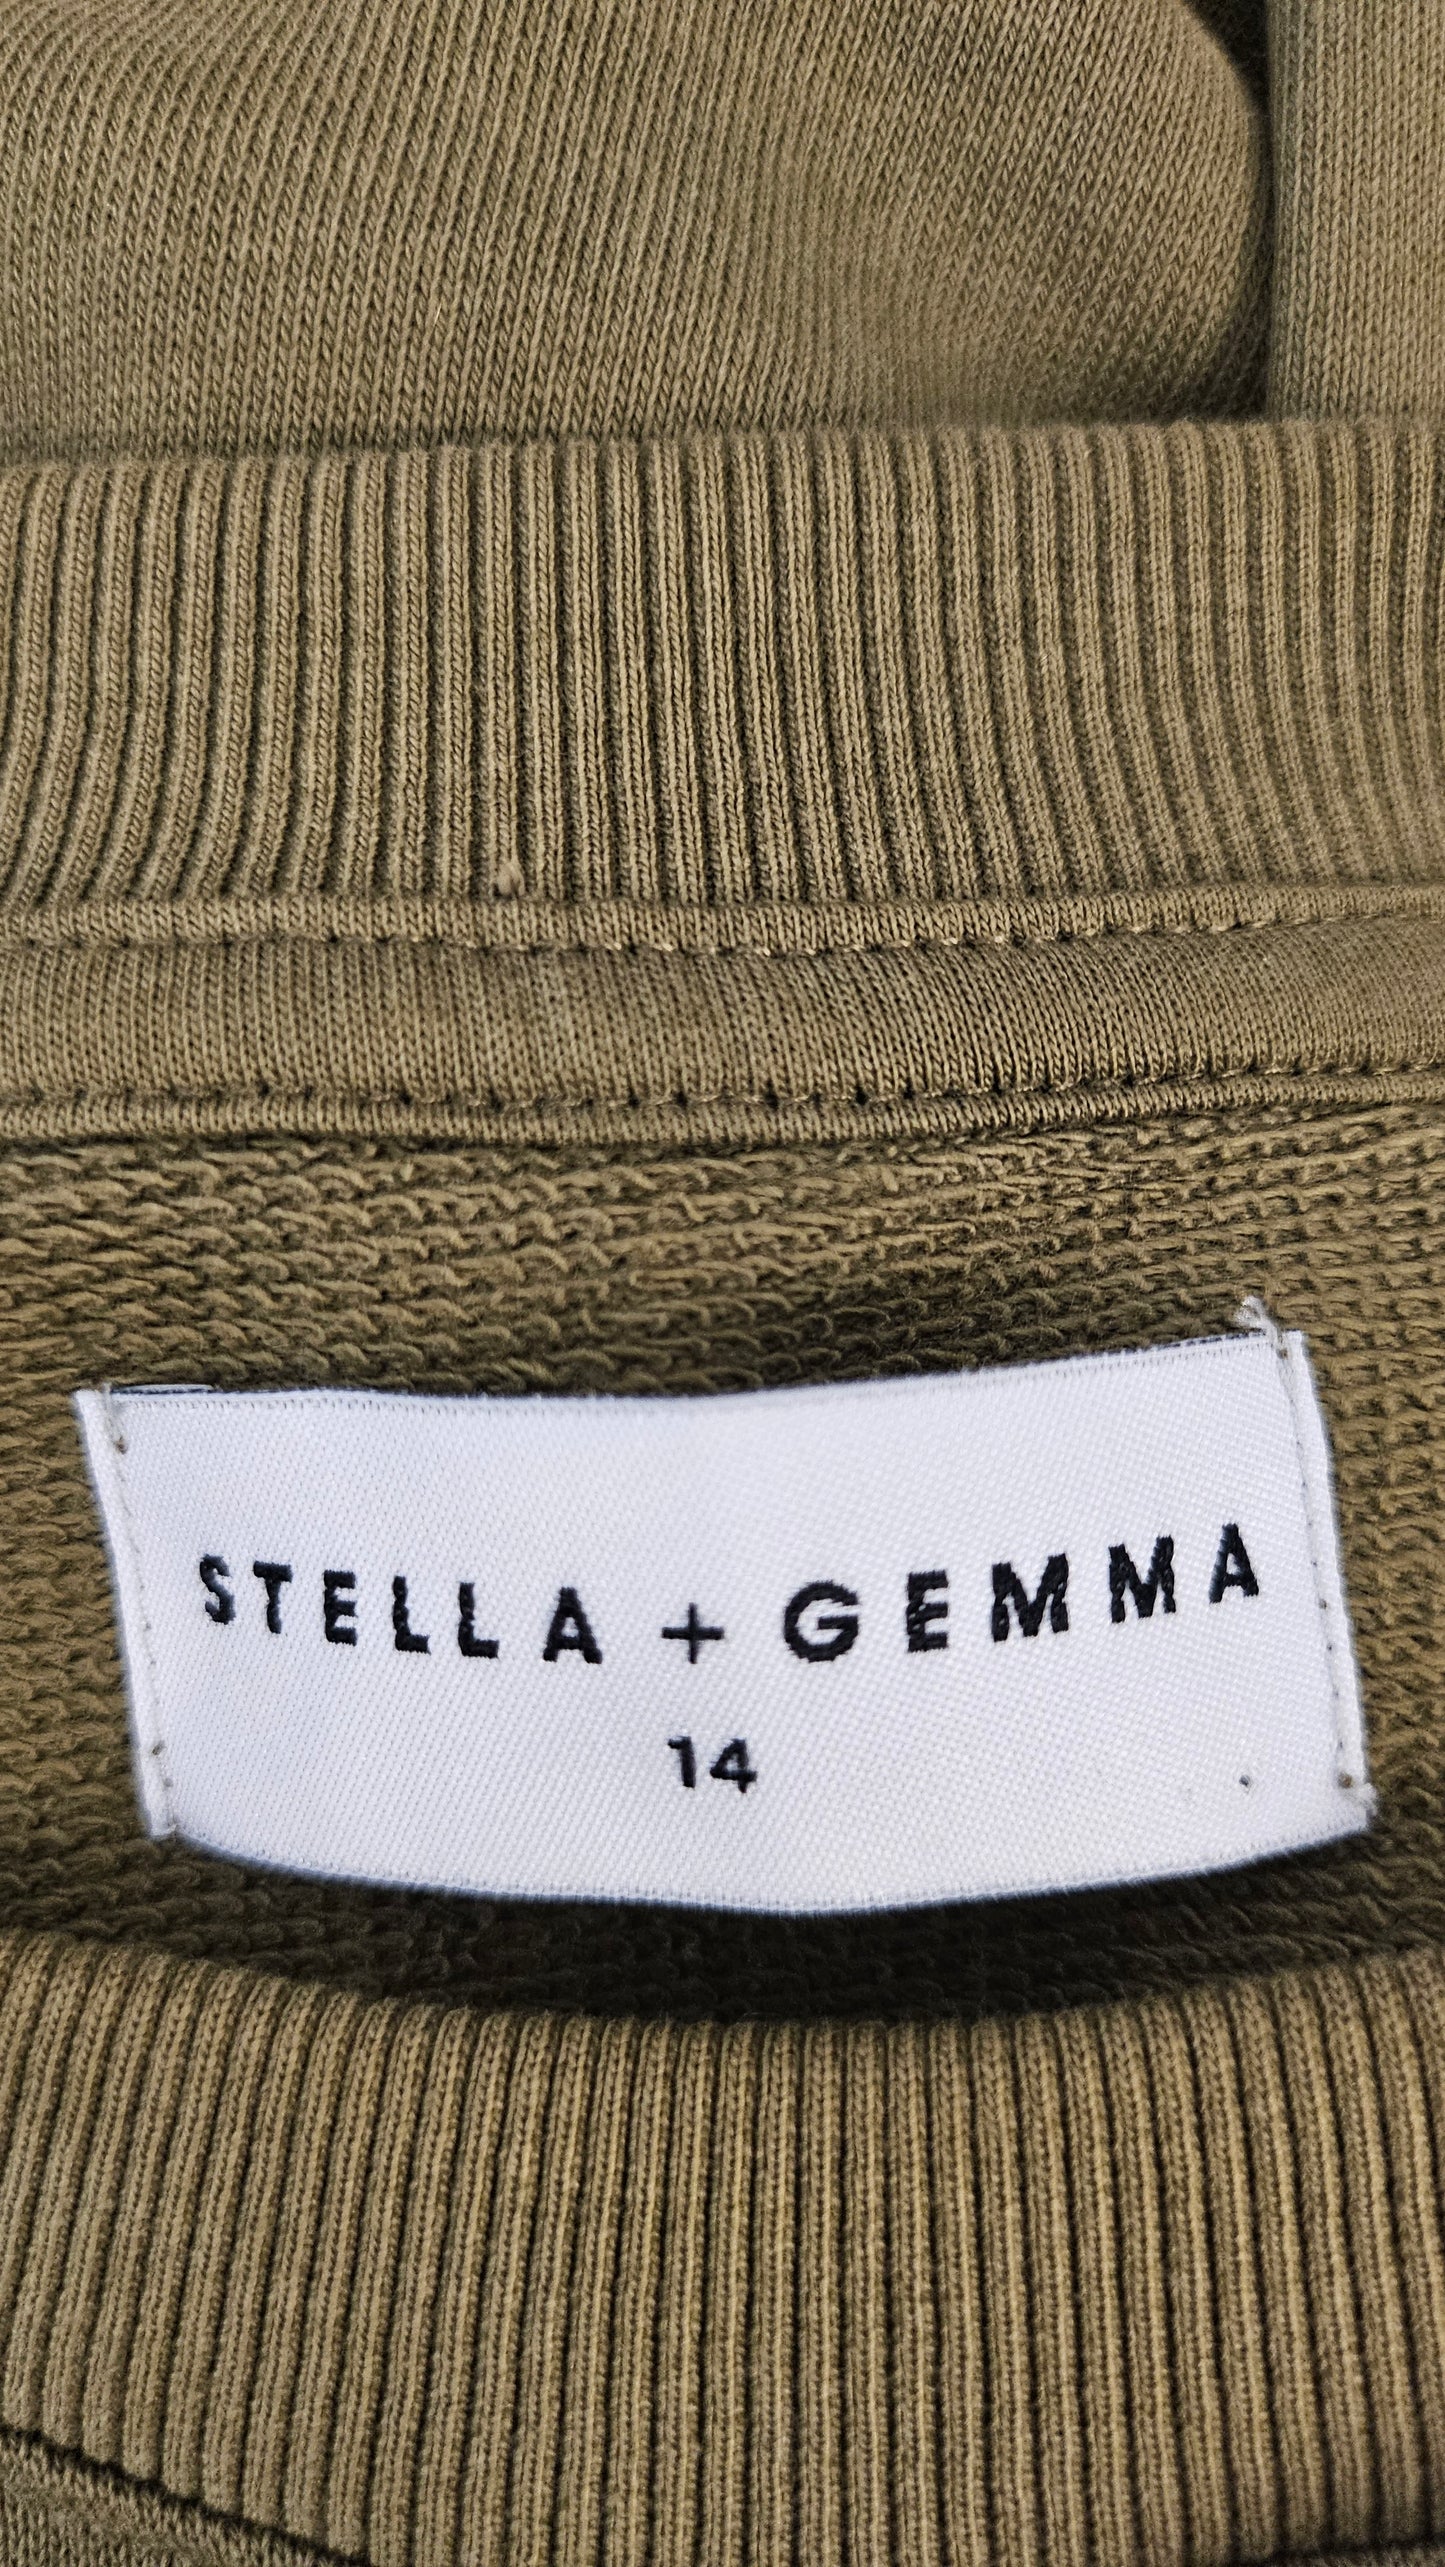 Stella+Gemma Olive Double Ruffle Sweater (14)